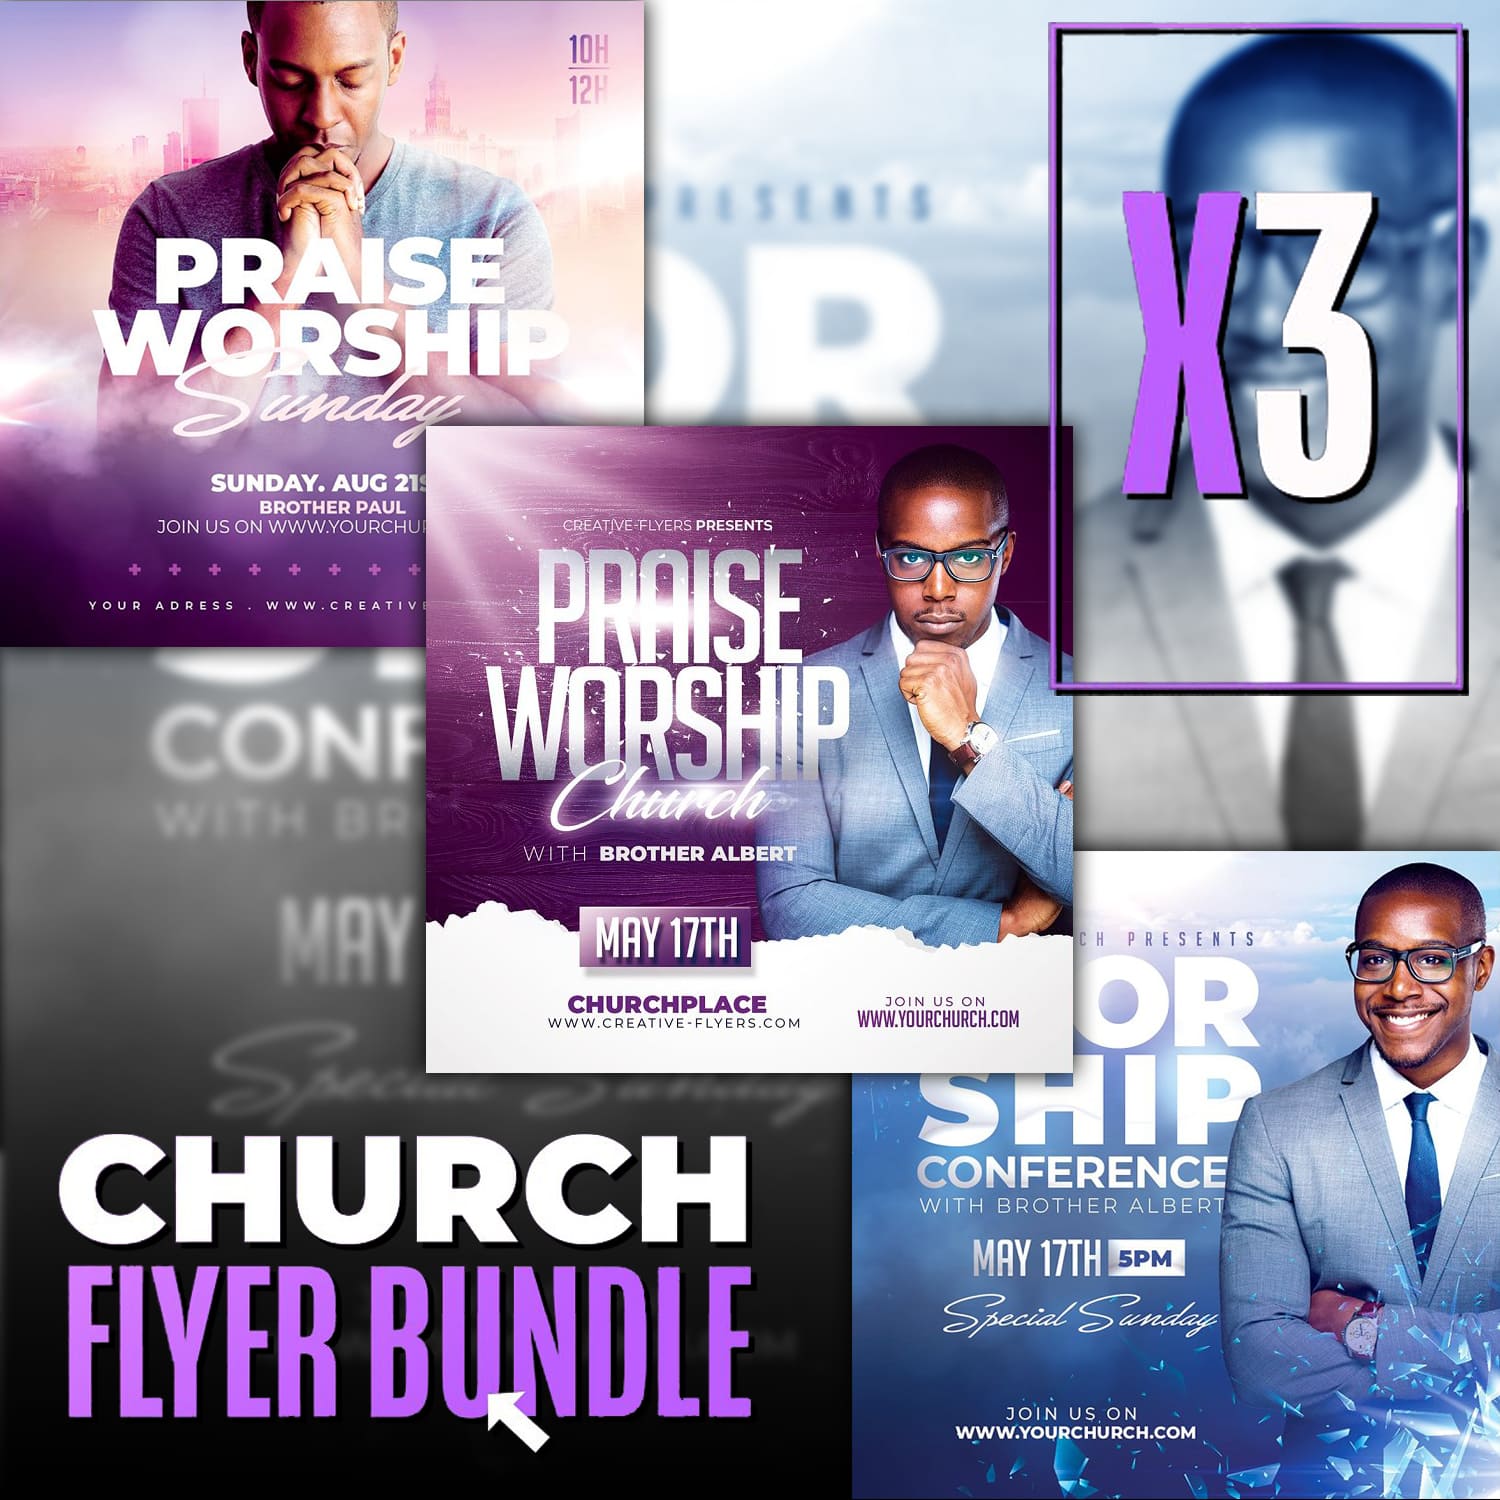 Church Flyer Bundle - PSD Templates cover.